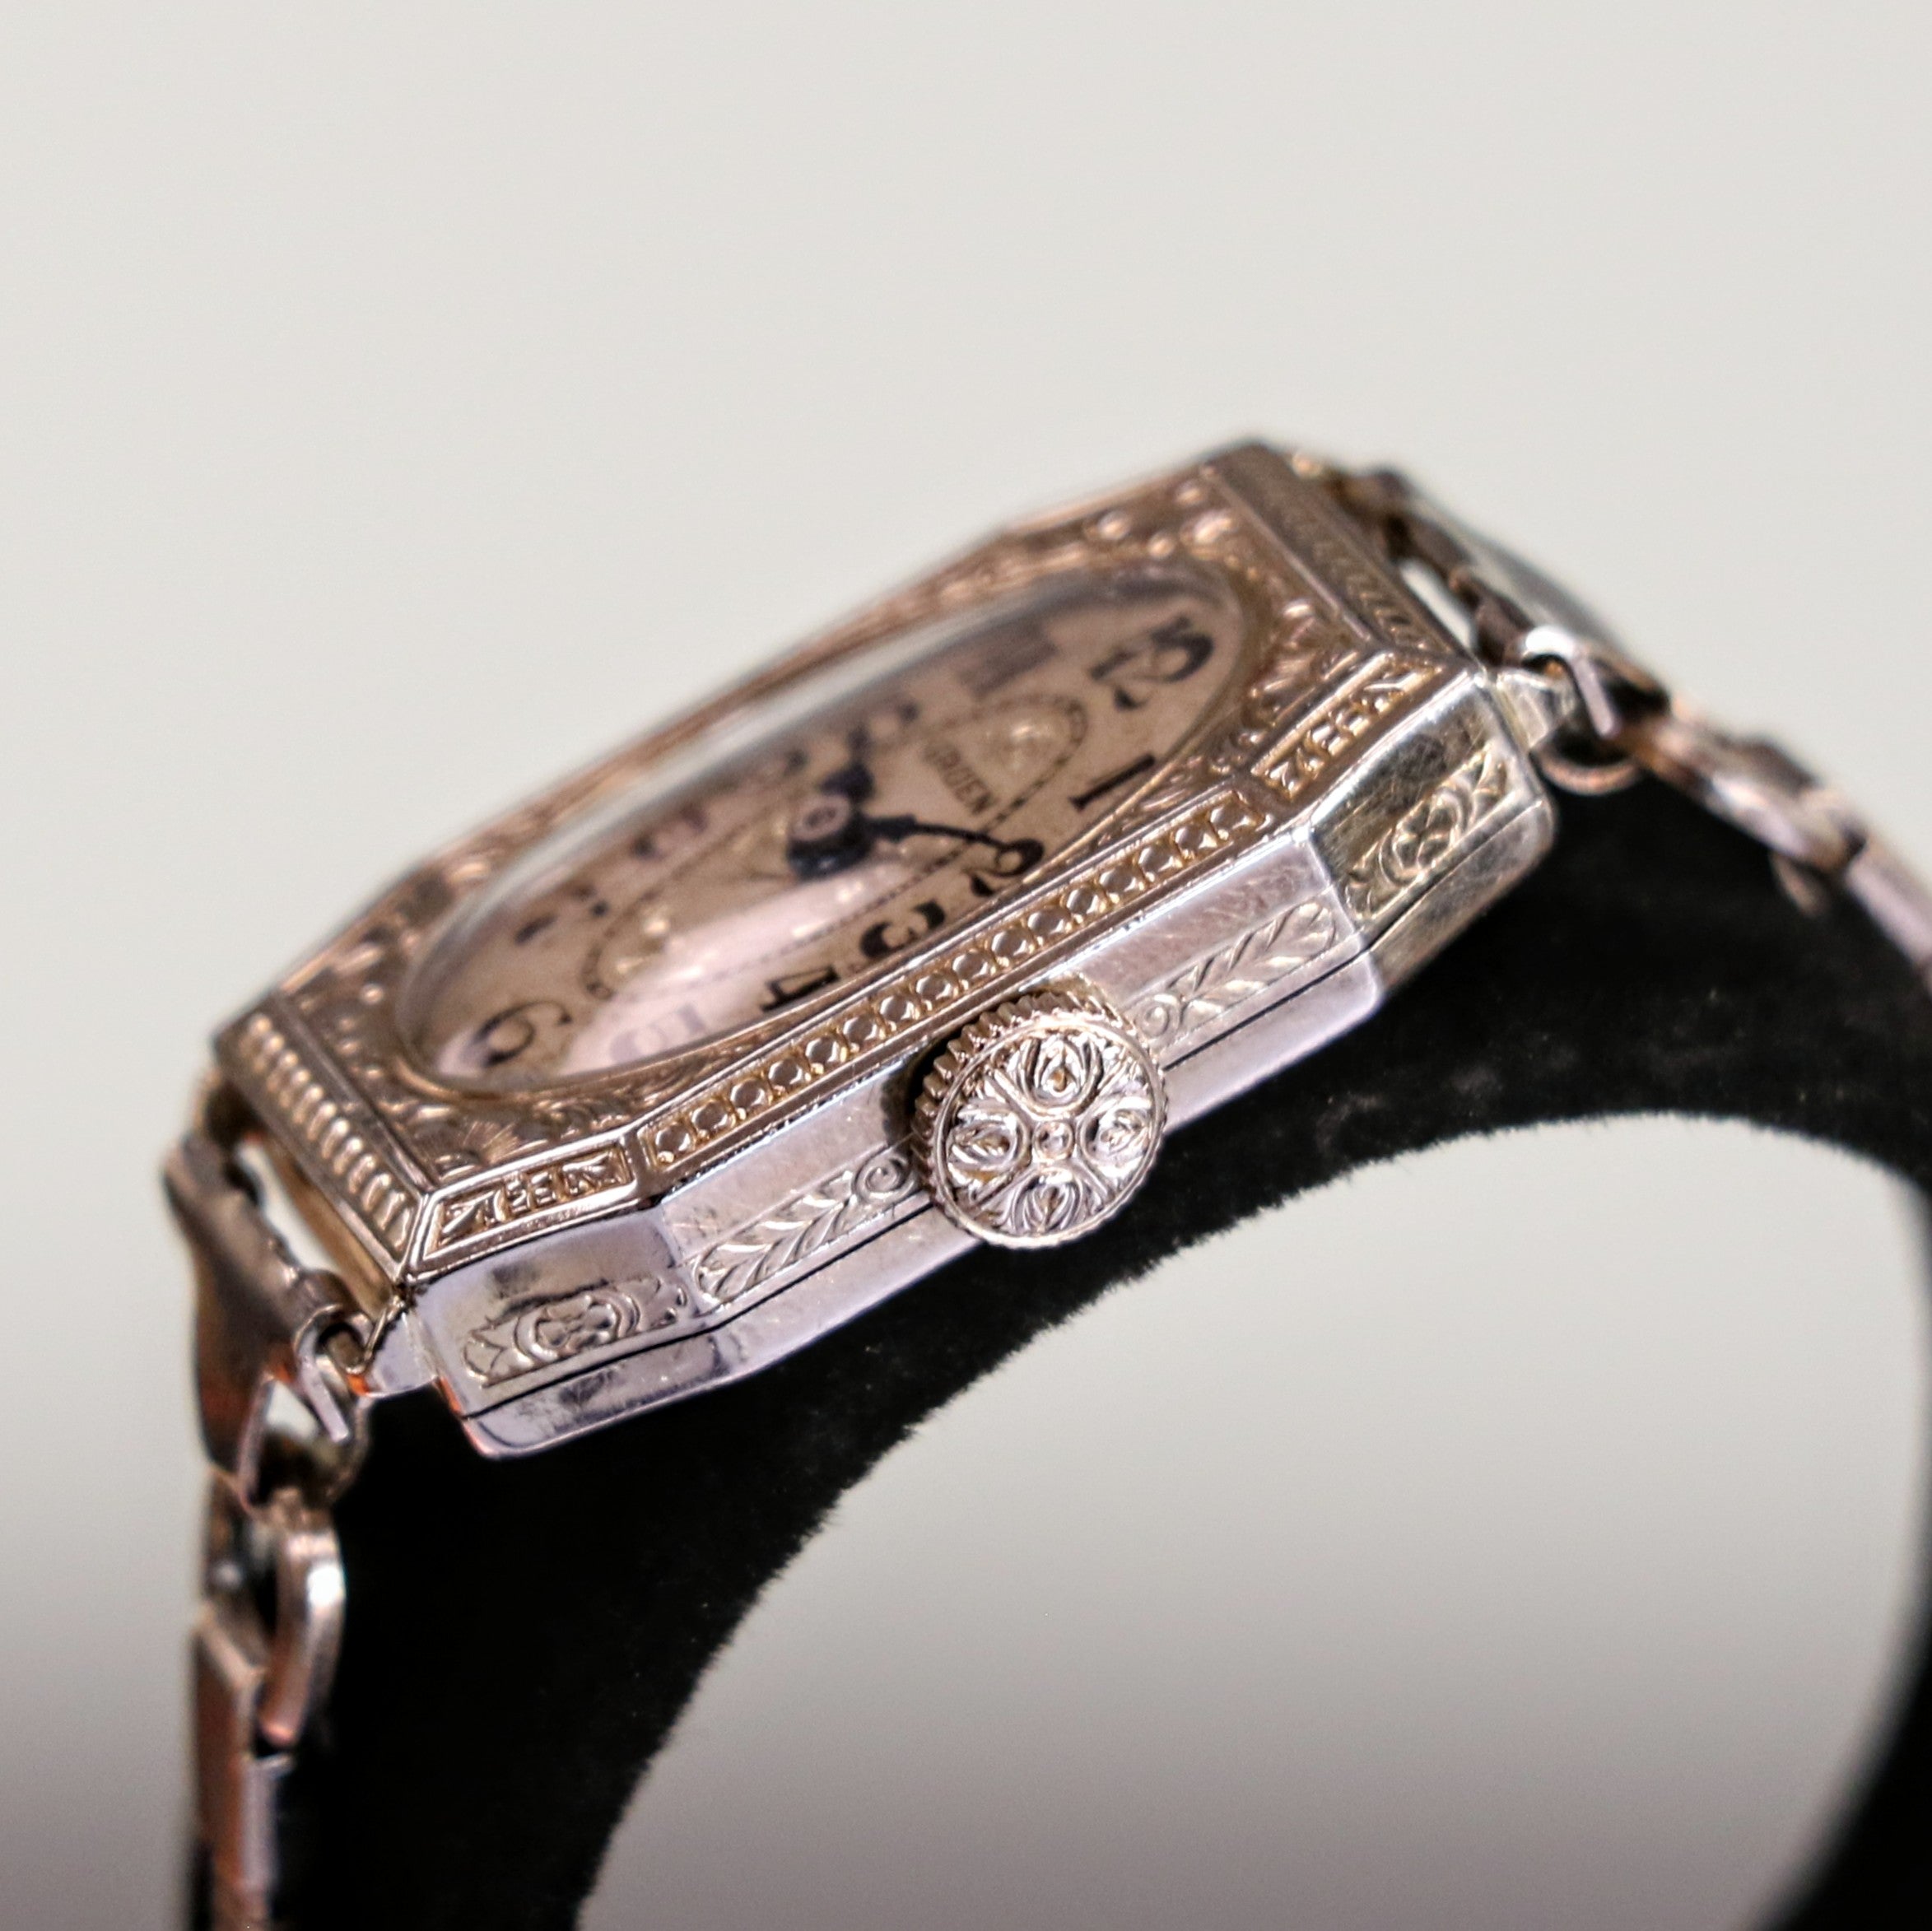 GRUEN Guild Art Deco Ladies Watch  Cal. 163 15 Jewels 3ADJ Swiss Made Vintage Wristwatch - ALL ORIGINAL